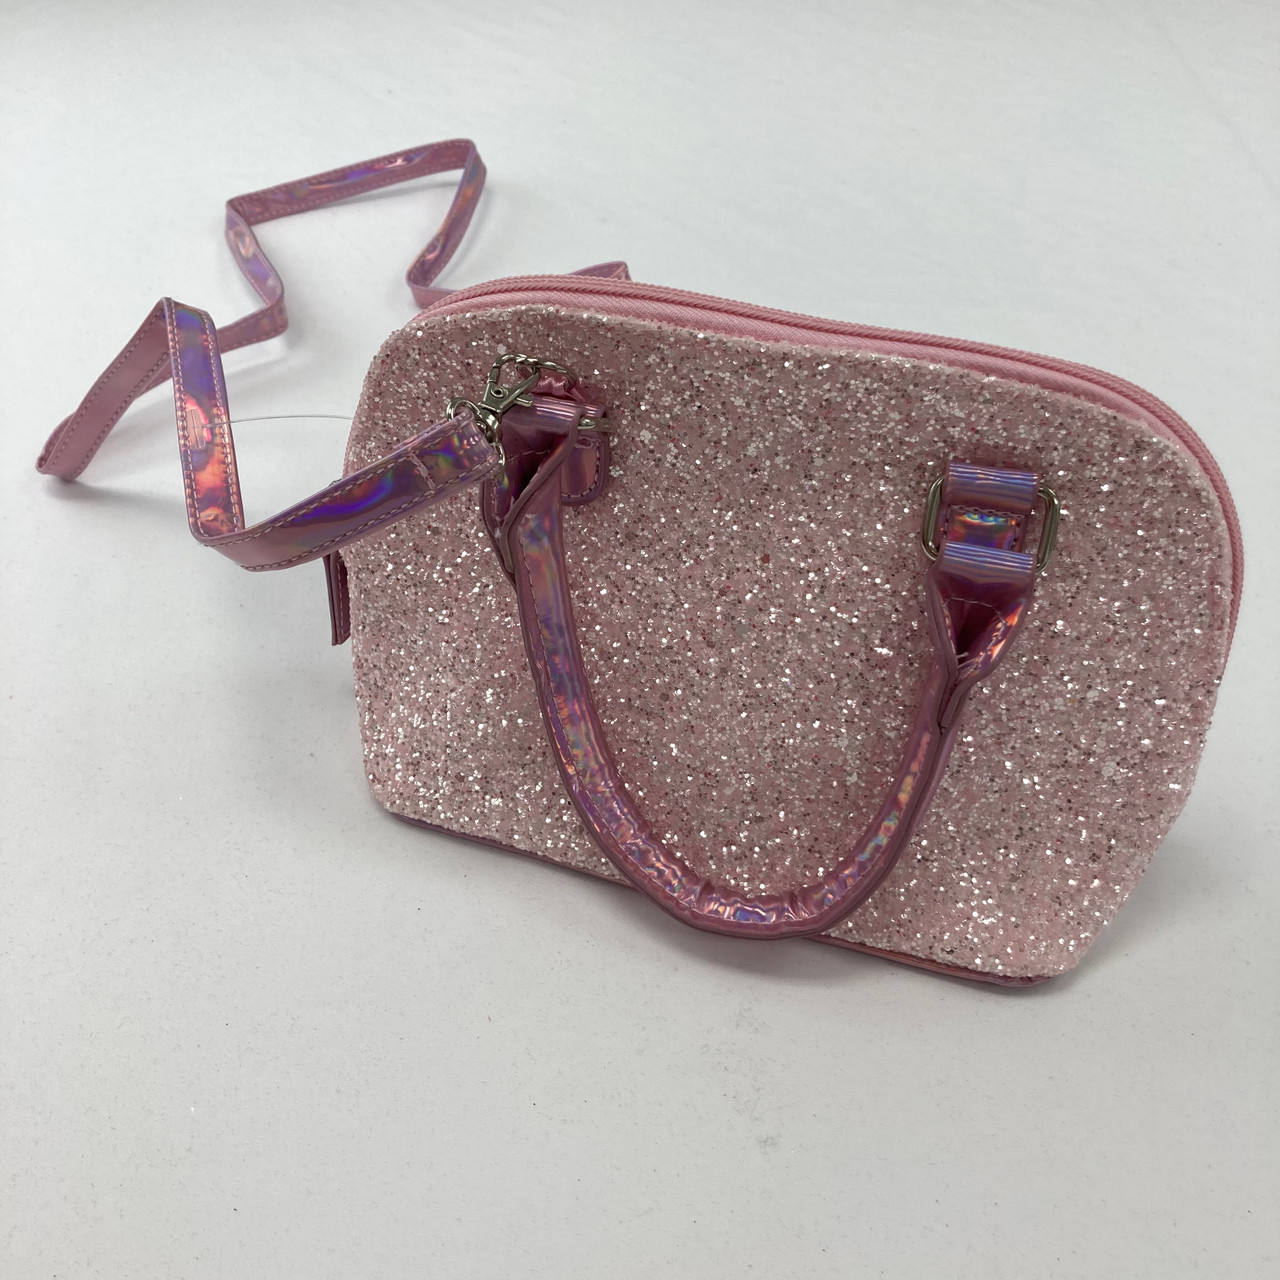 Cleo glitter handbag Prada Pink in Glitter - 39460771